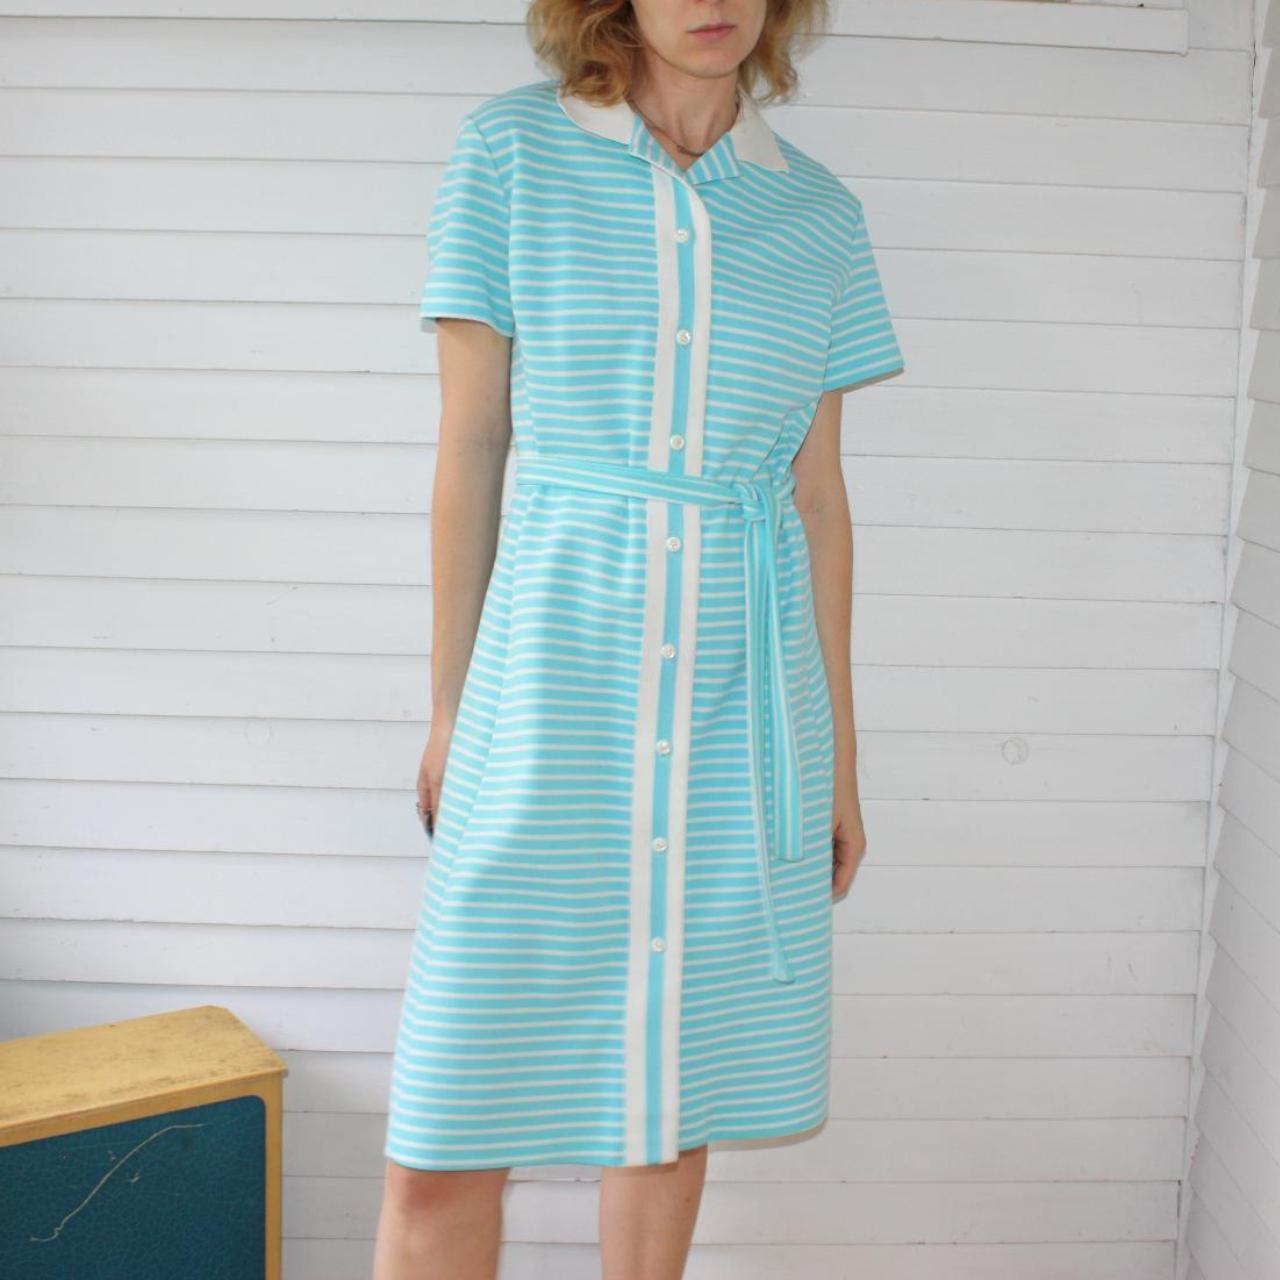 Vintage '60s Lacoste Polo Dress 📞 MARGOT TENENBAUM... - Depop